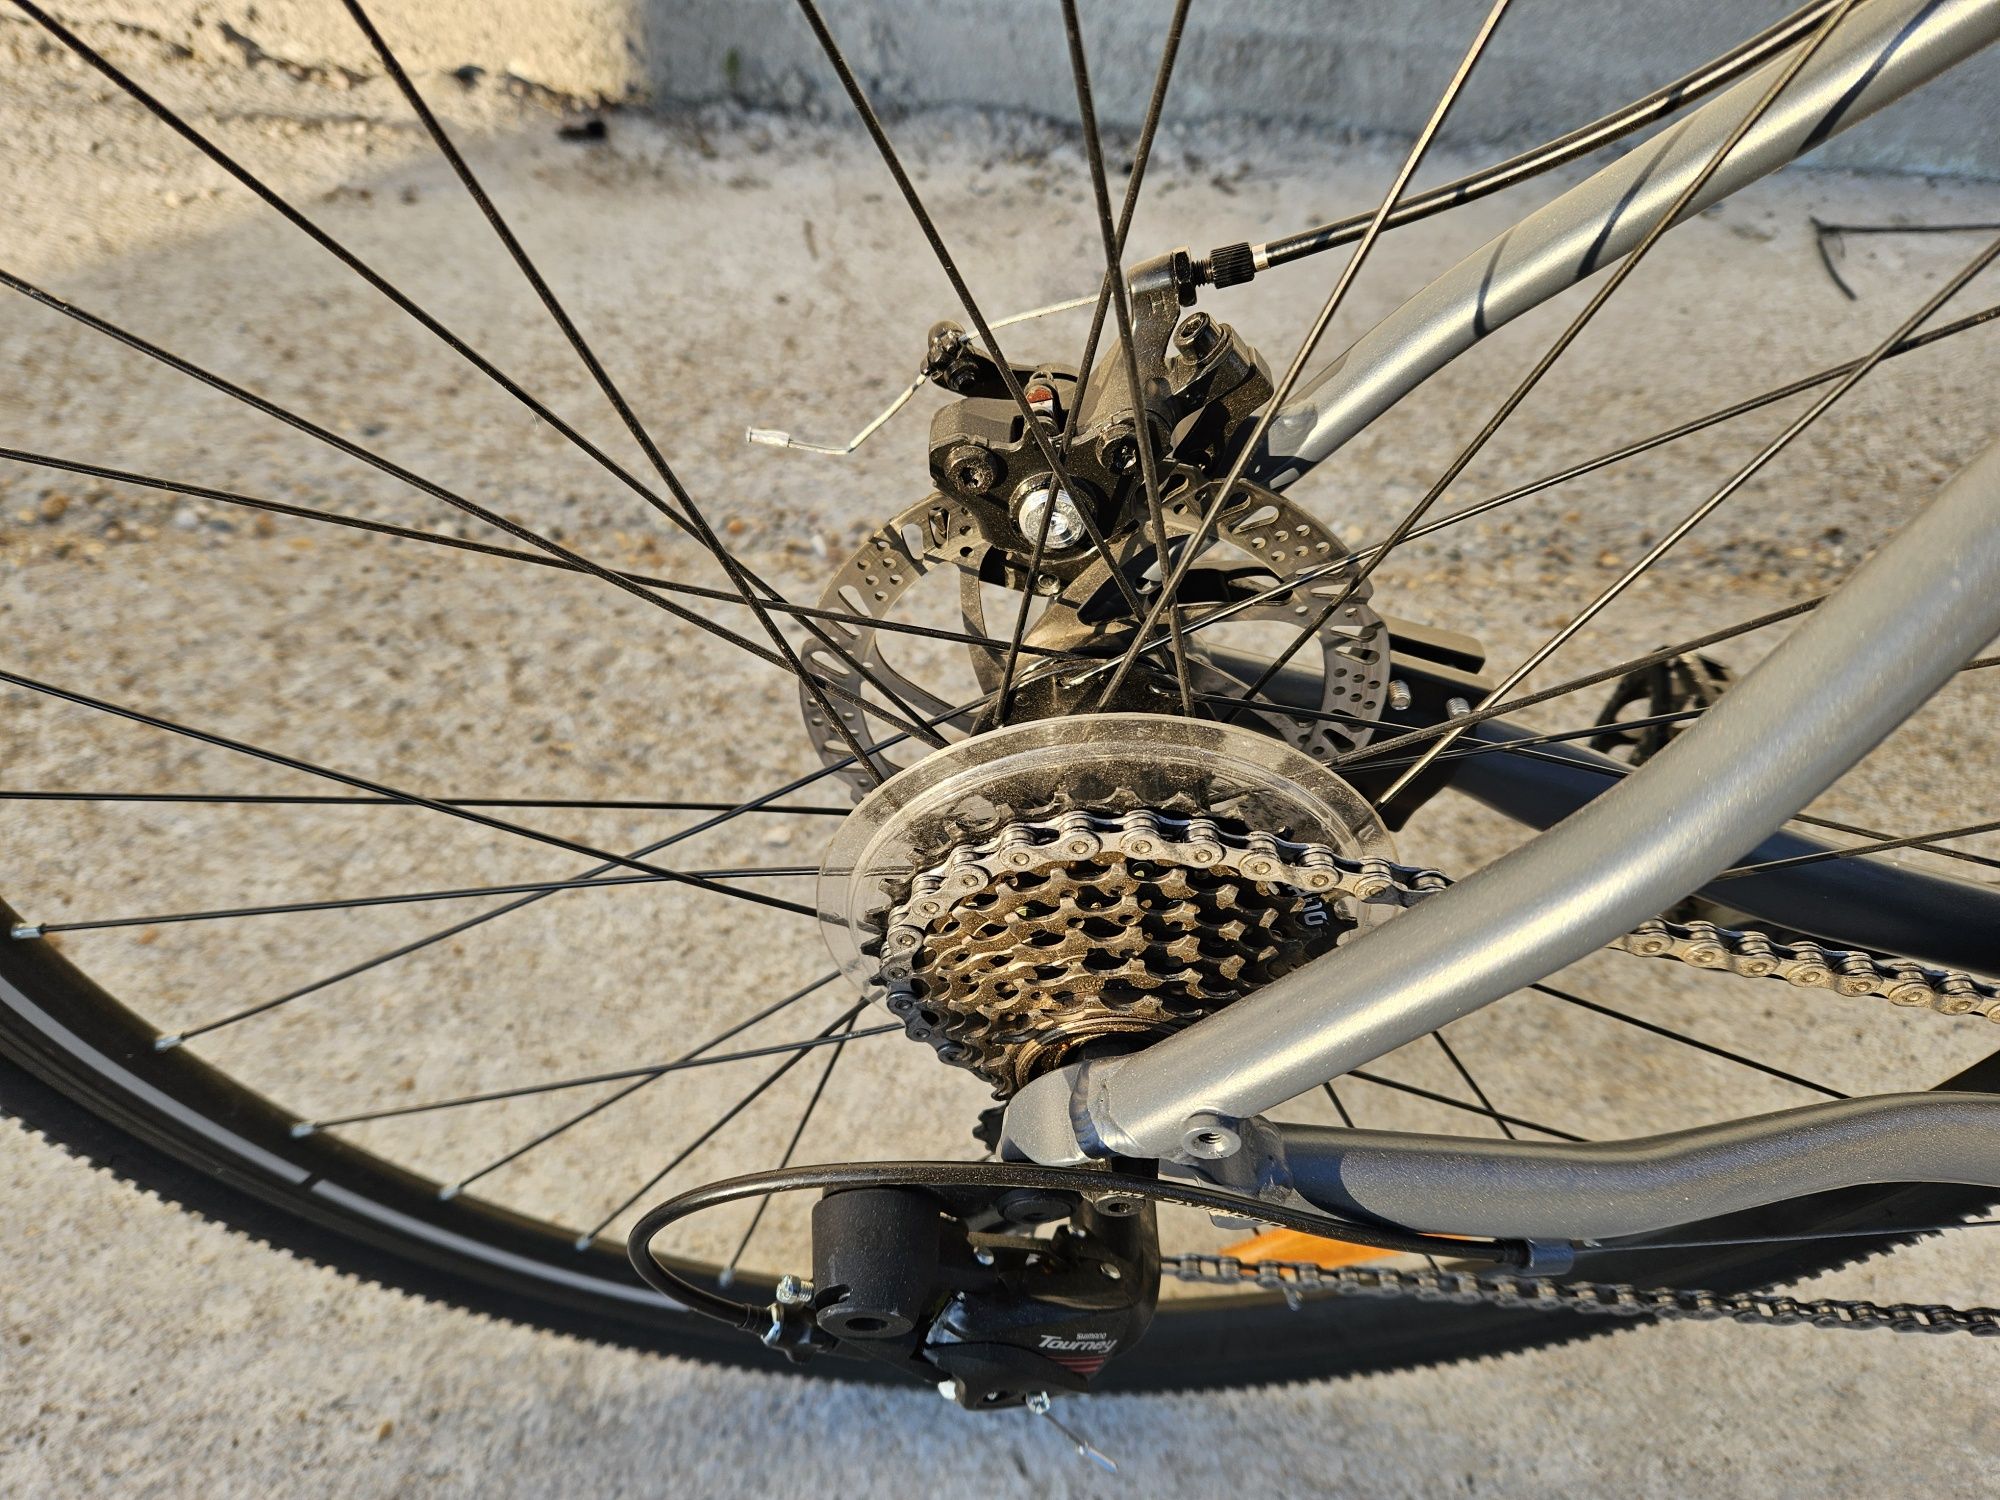 Bicicleta sko gravel aluminiu semicursiera